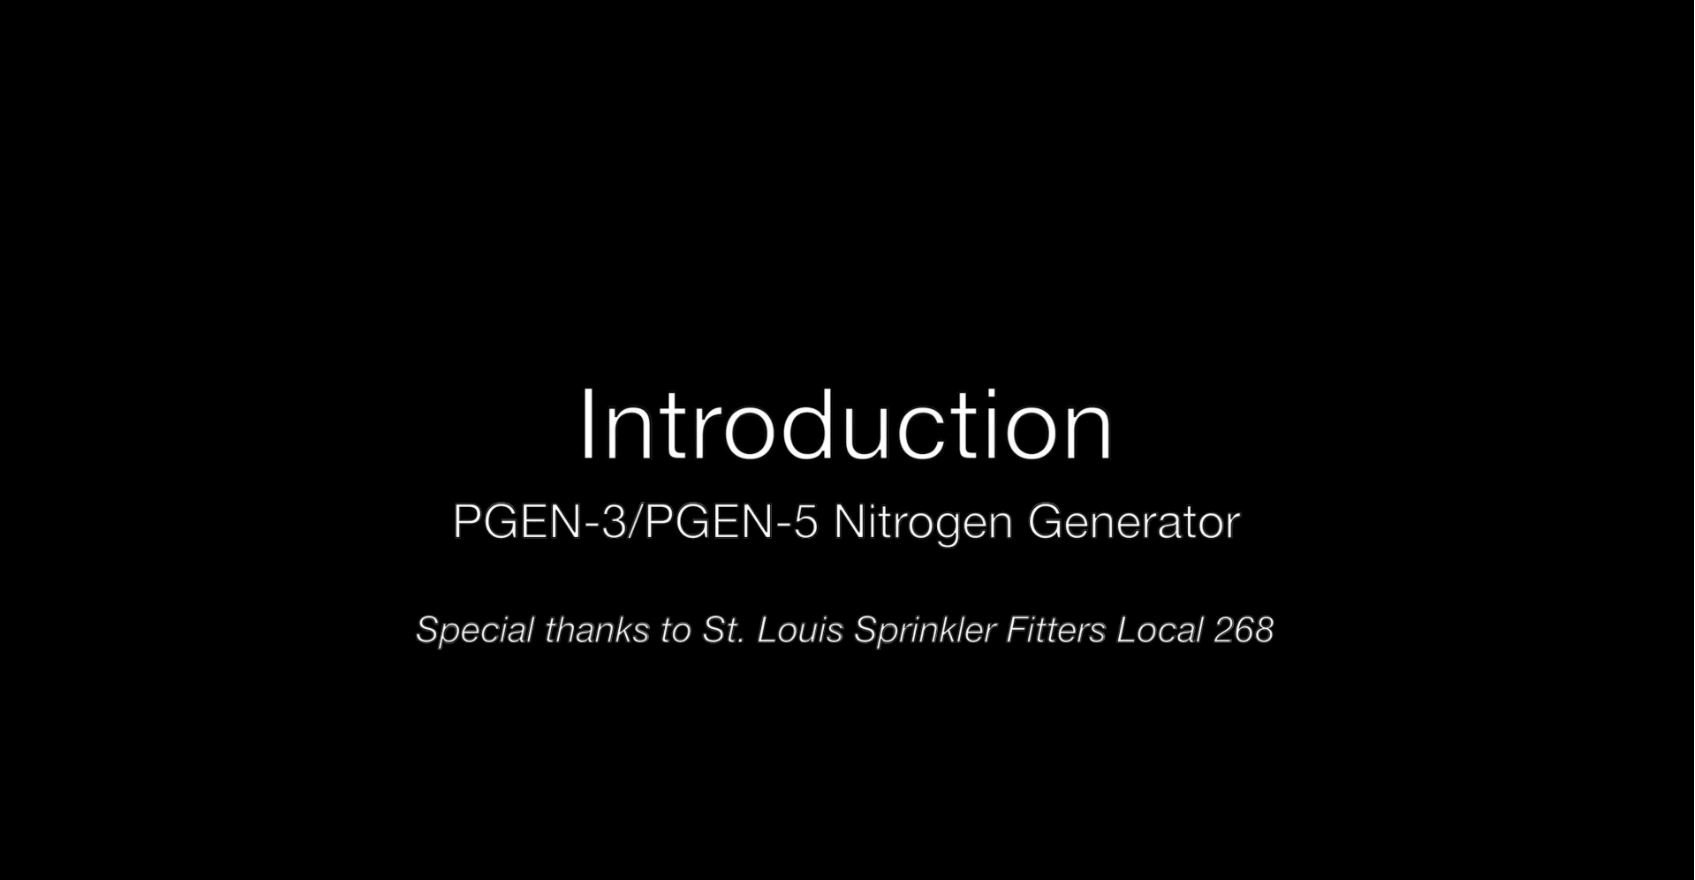 PGEN-3 PGEN-5 Nitrogen Generator and Fire Sprinkler Corrosion